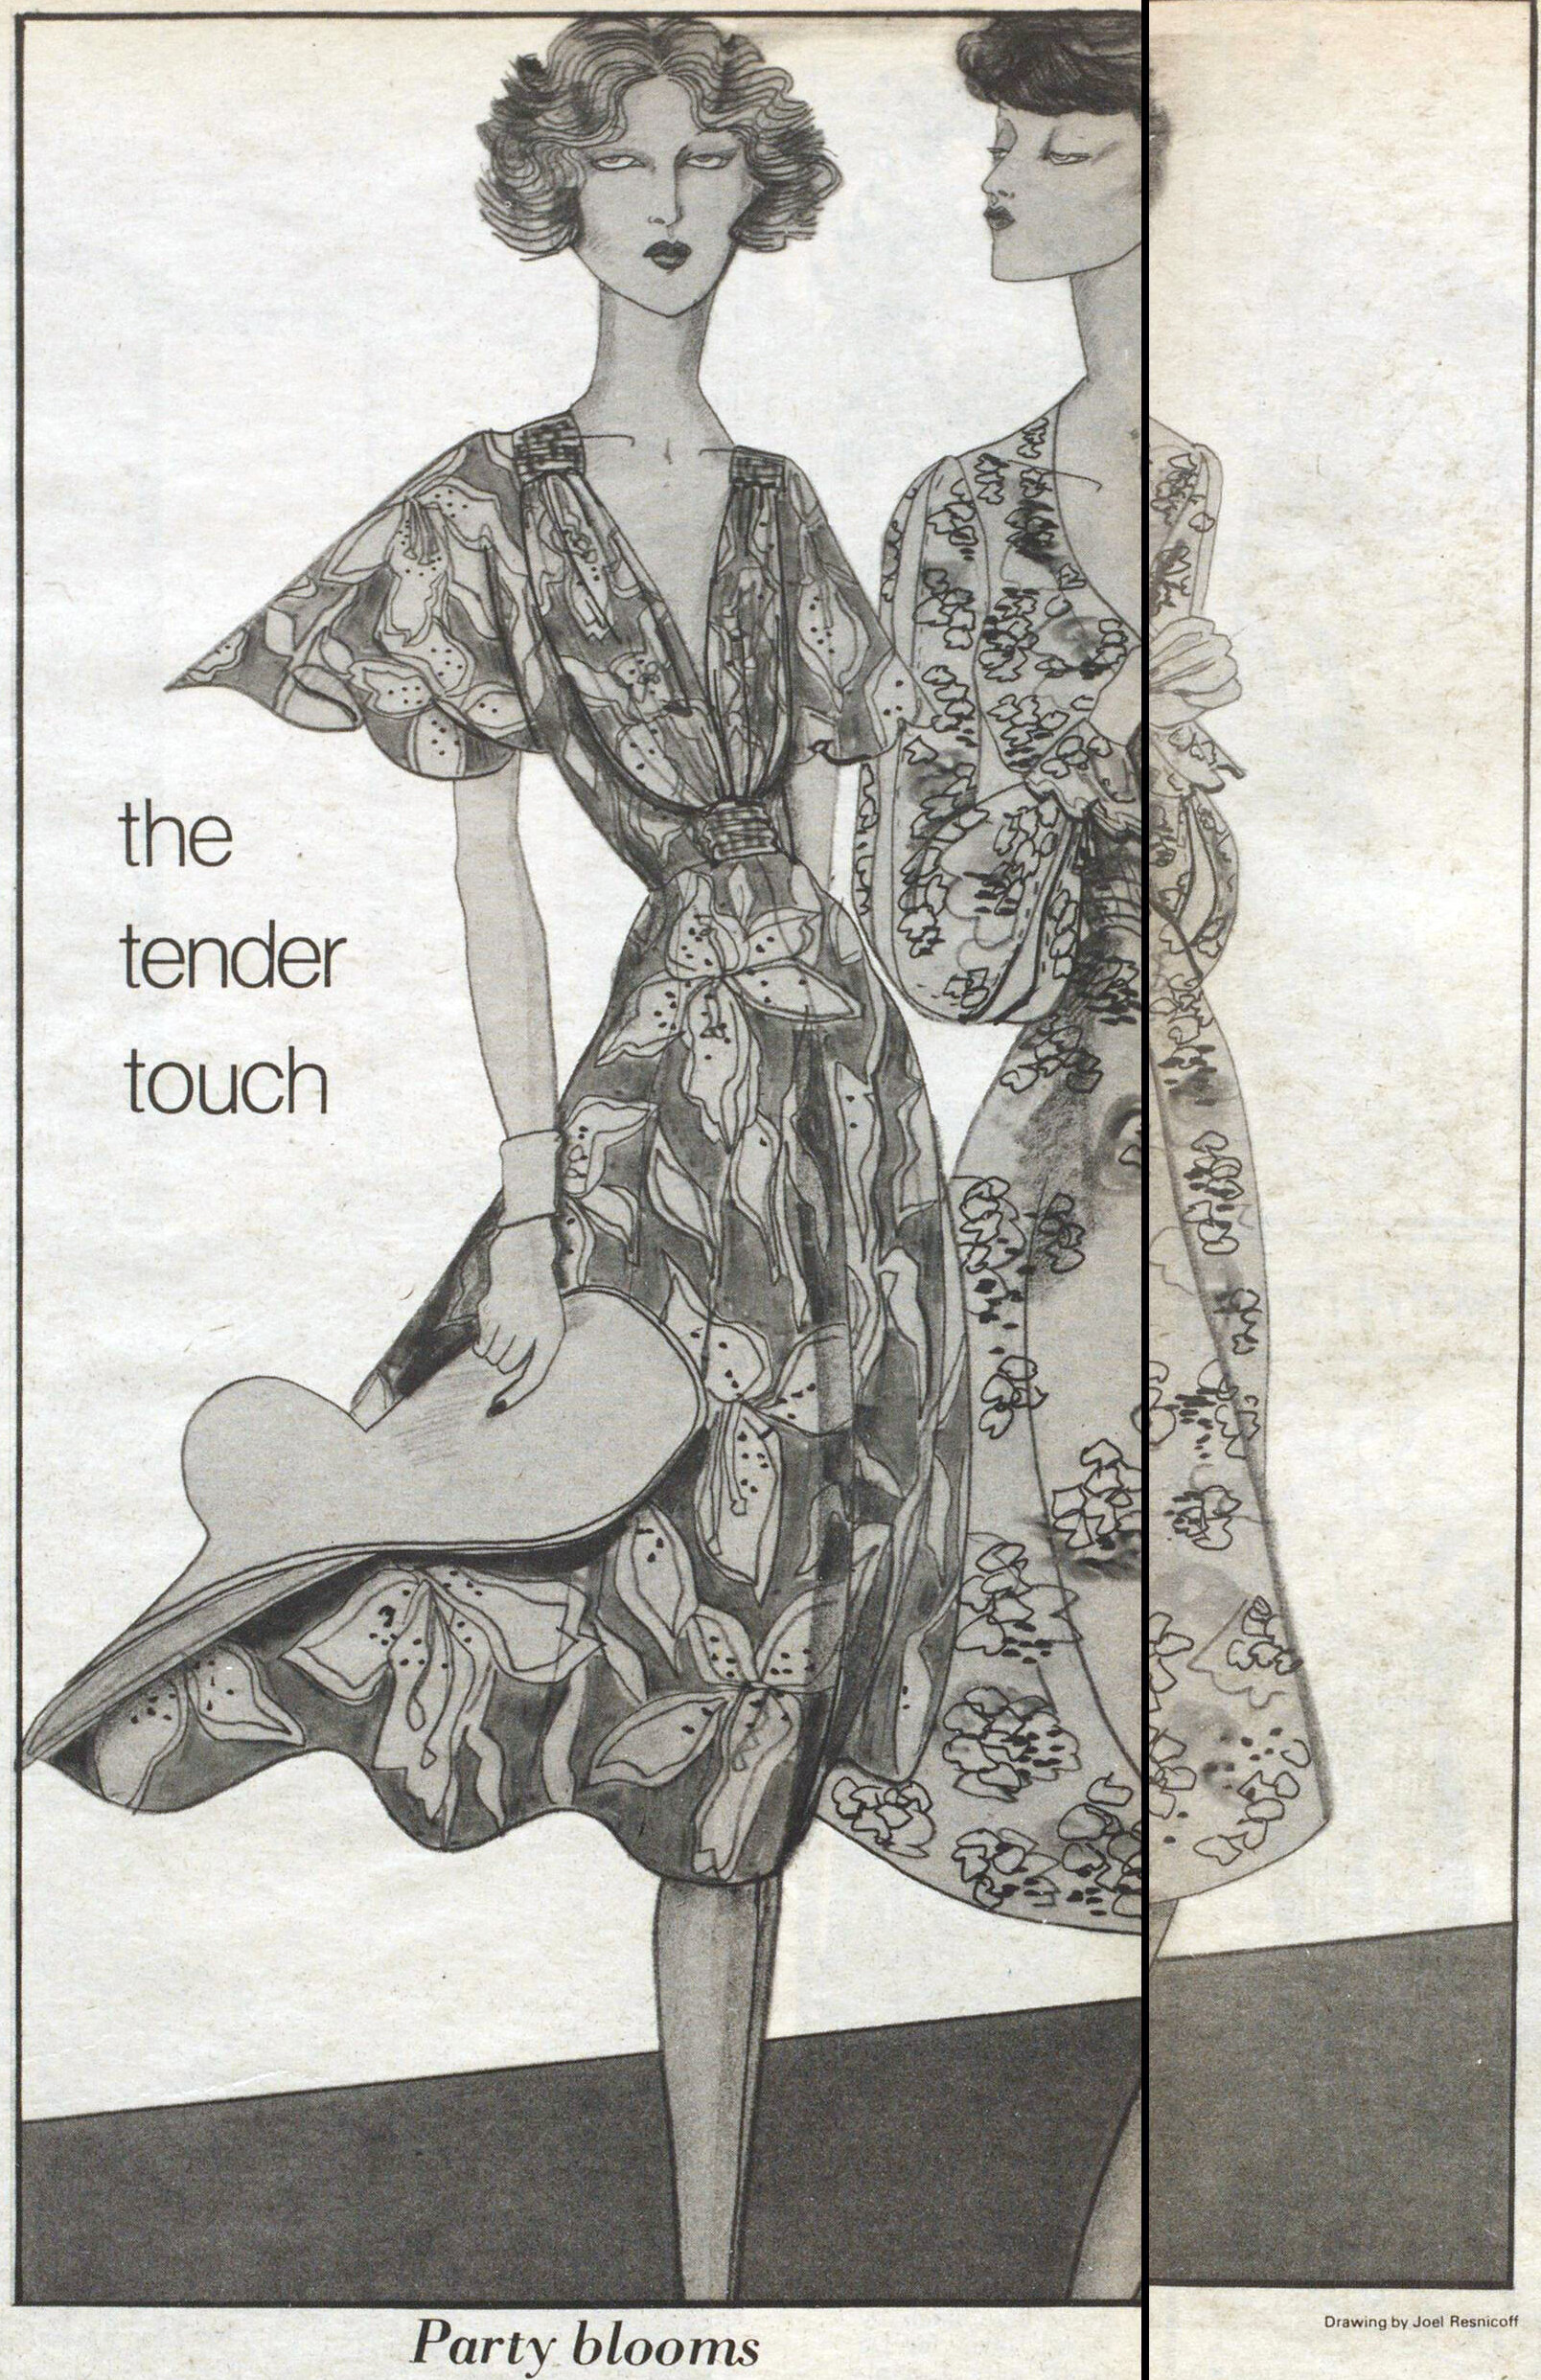 Right, Tere Tereba for J.T. Dress Co. Women’s Wear Daily, August 7, 1974.